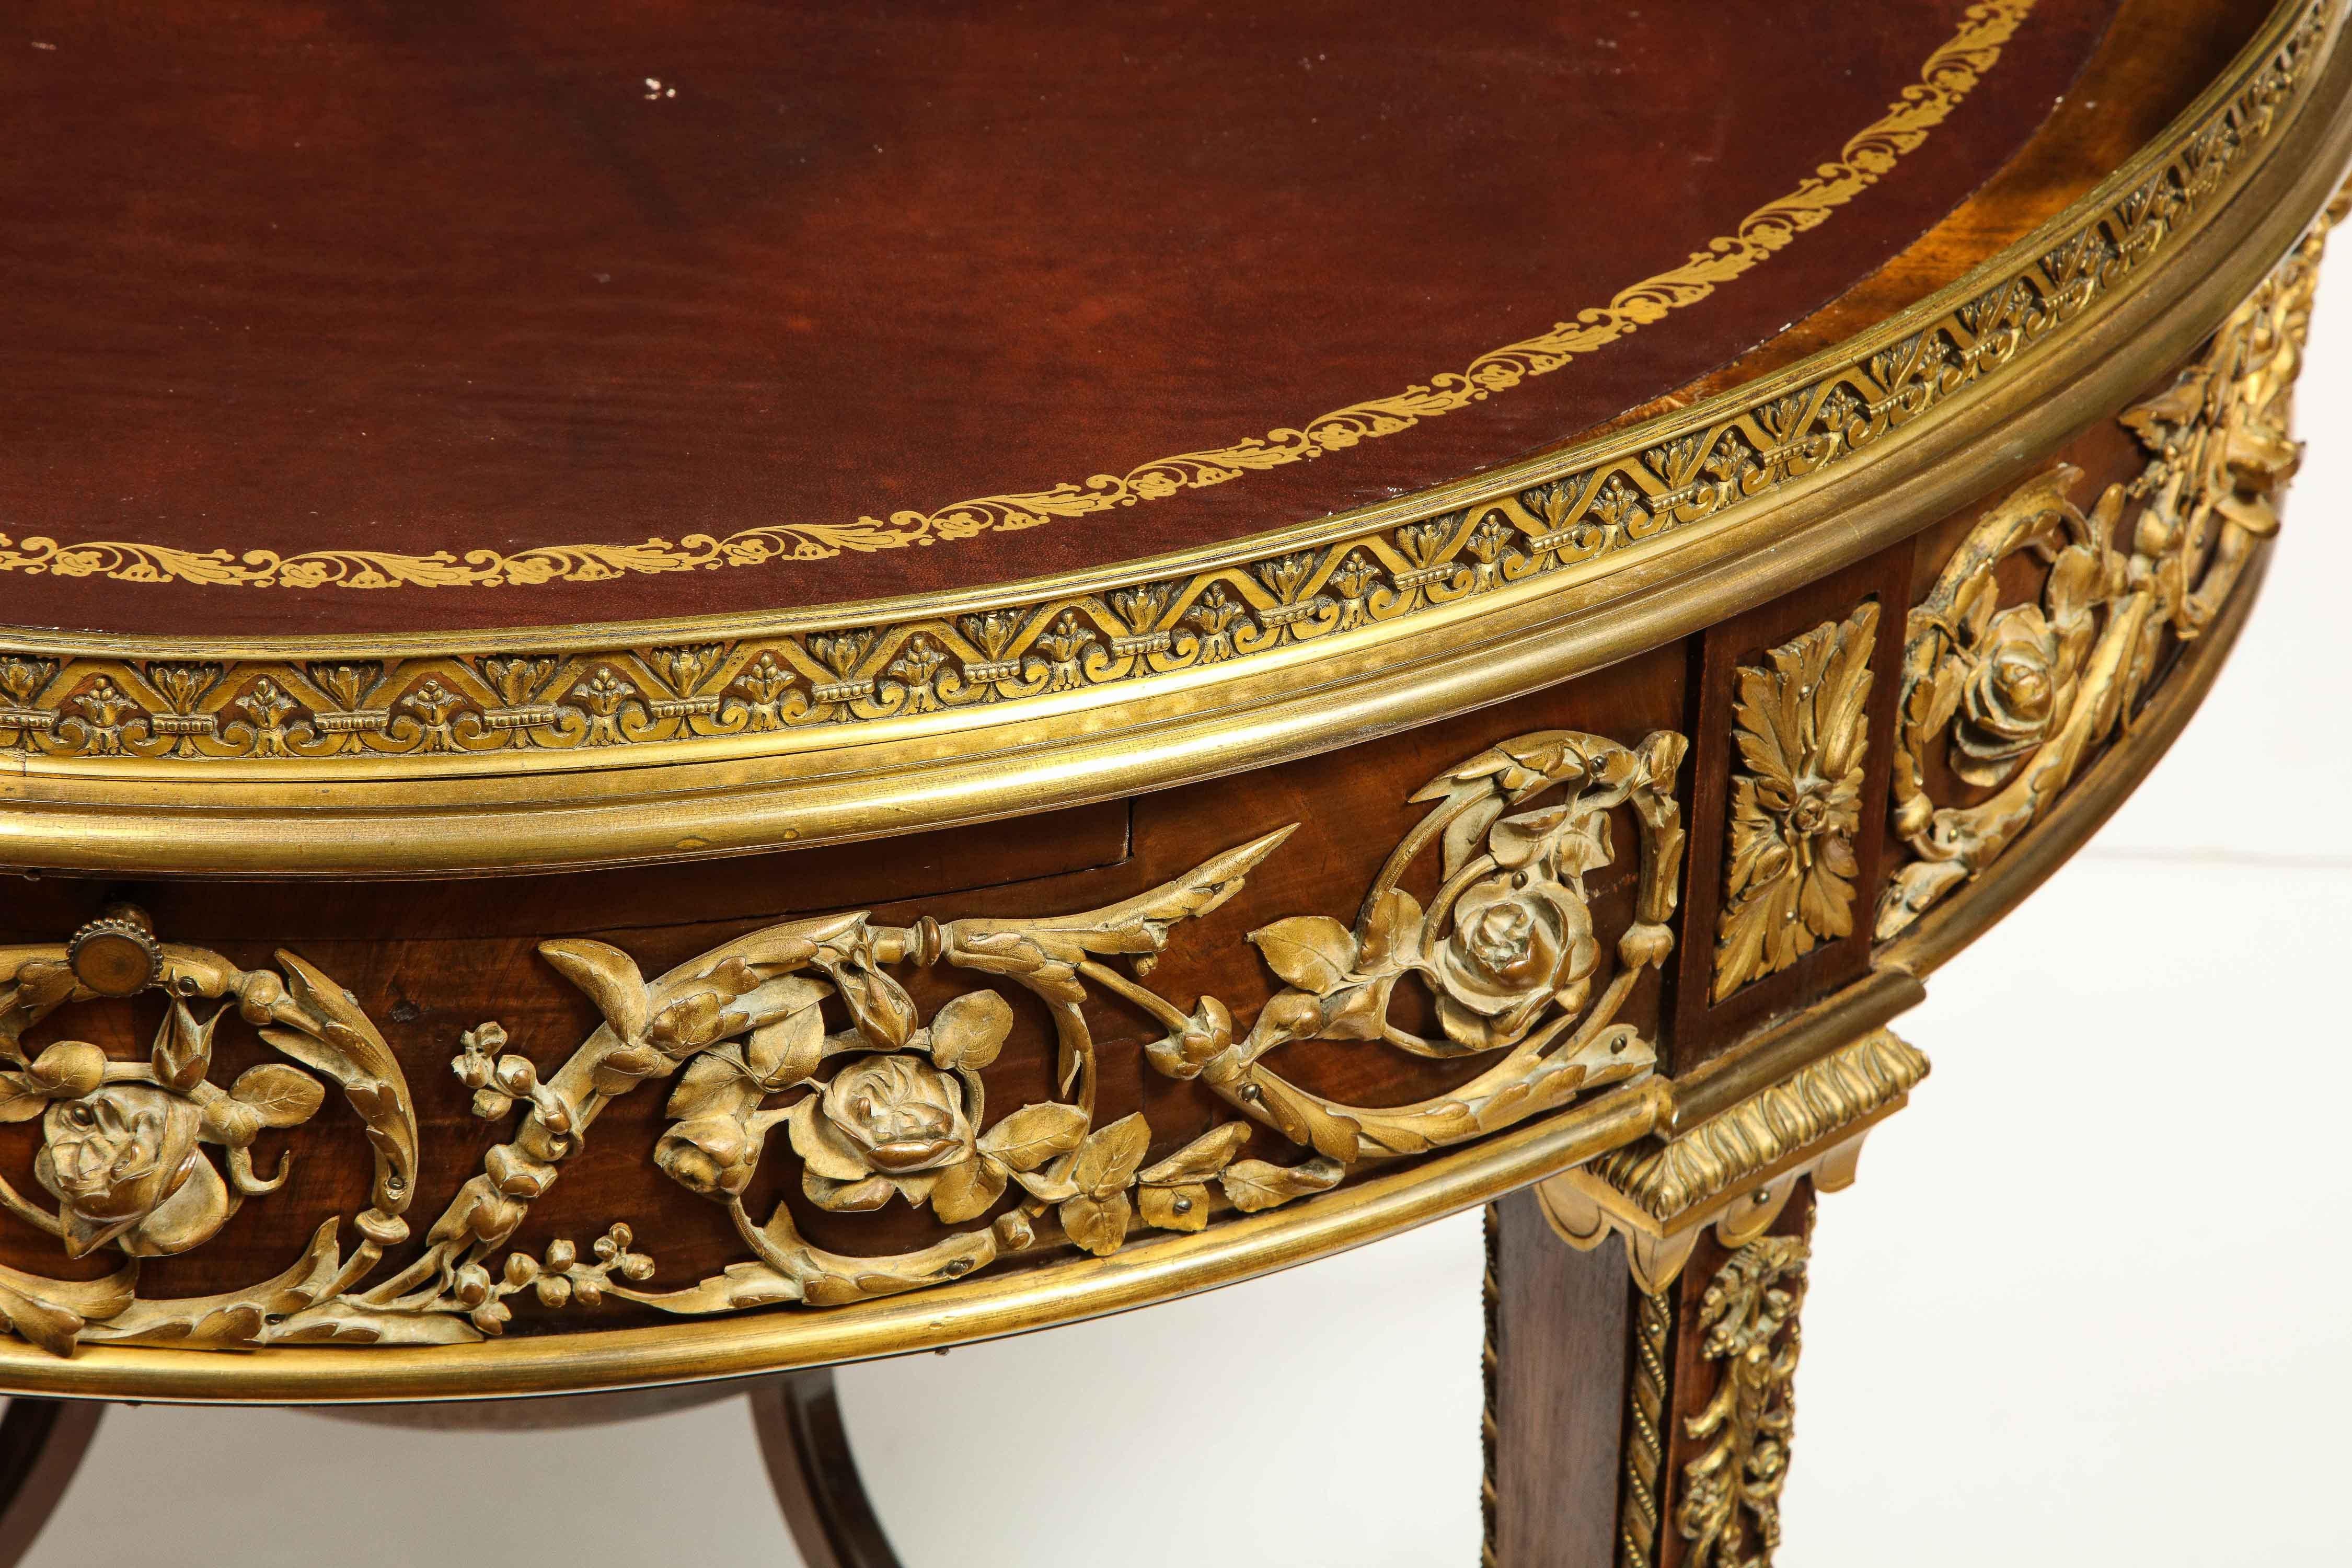 19th Century Exceptional Quality French Ormolu-Mounted Mahogany Center Table, Attrib F. Linke